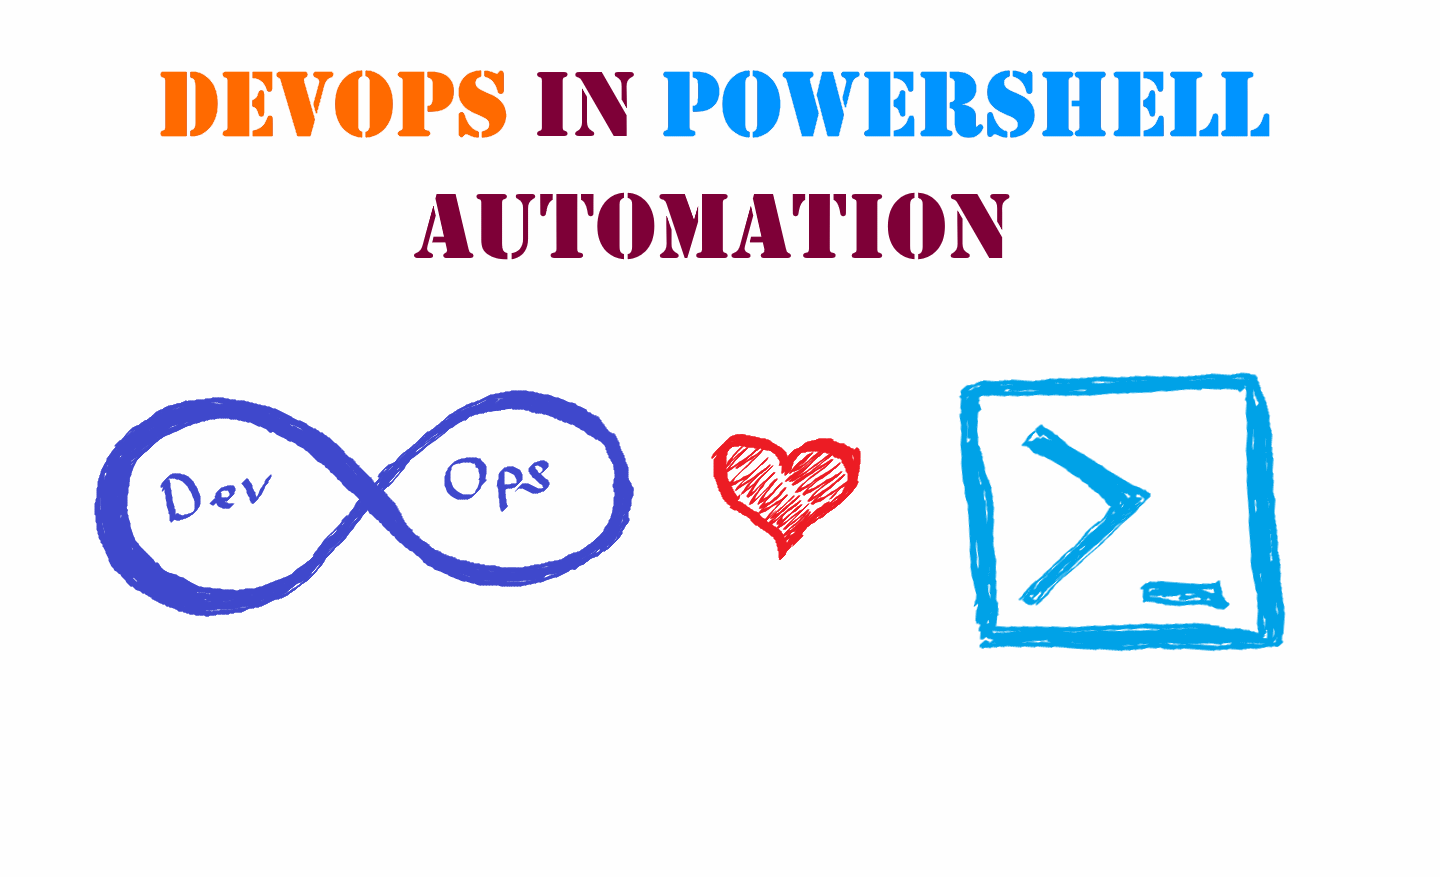 DevOps in PowerShell automation